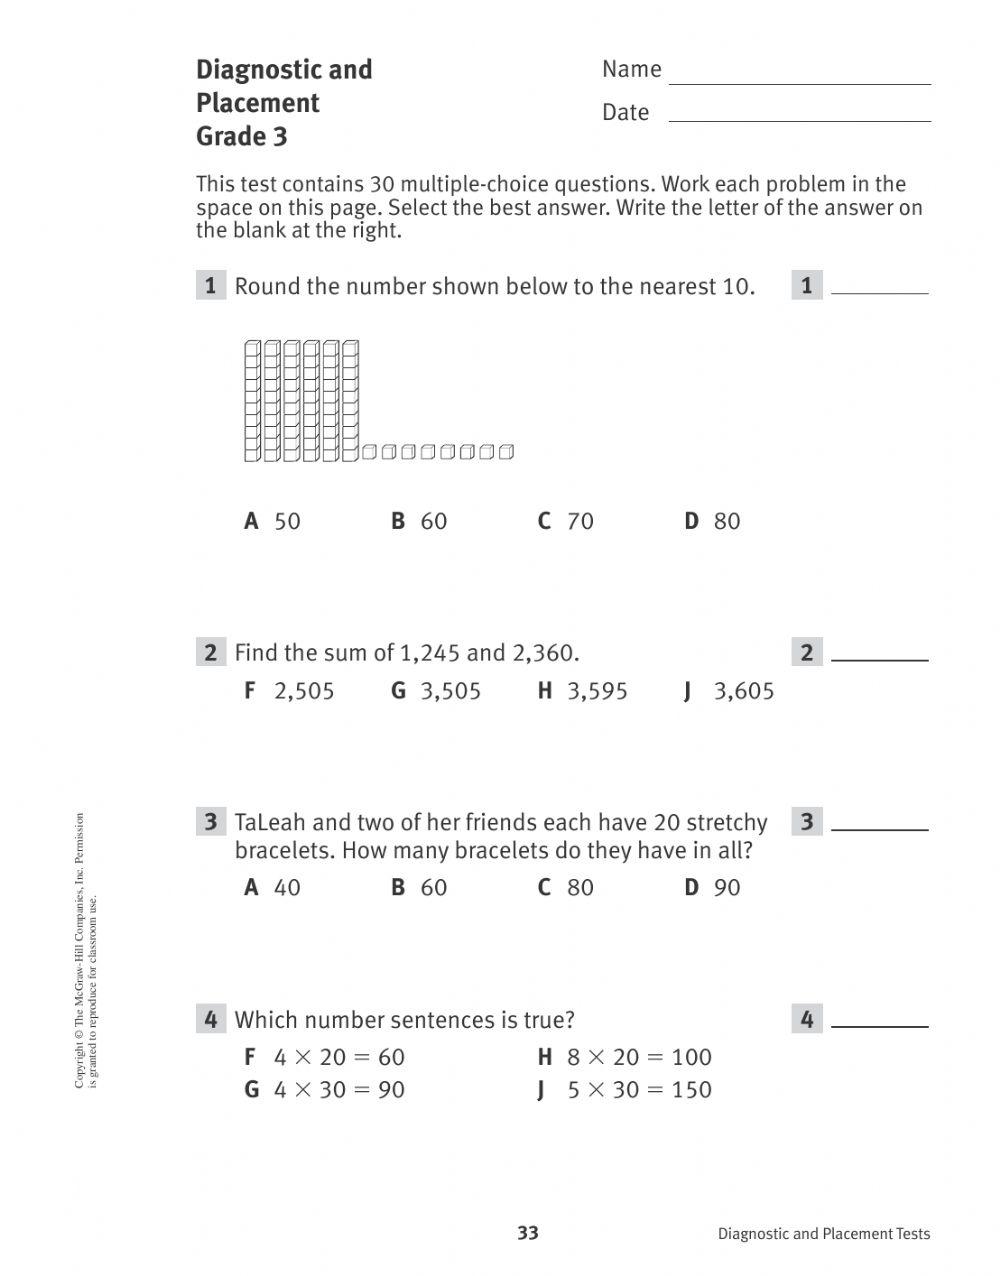 Grade 4 Math Diagnostic Assessment Part 1